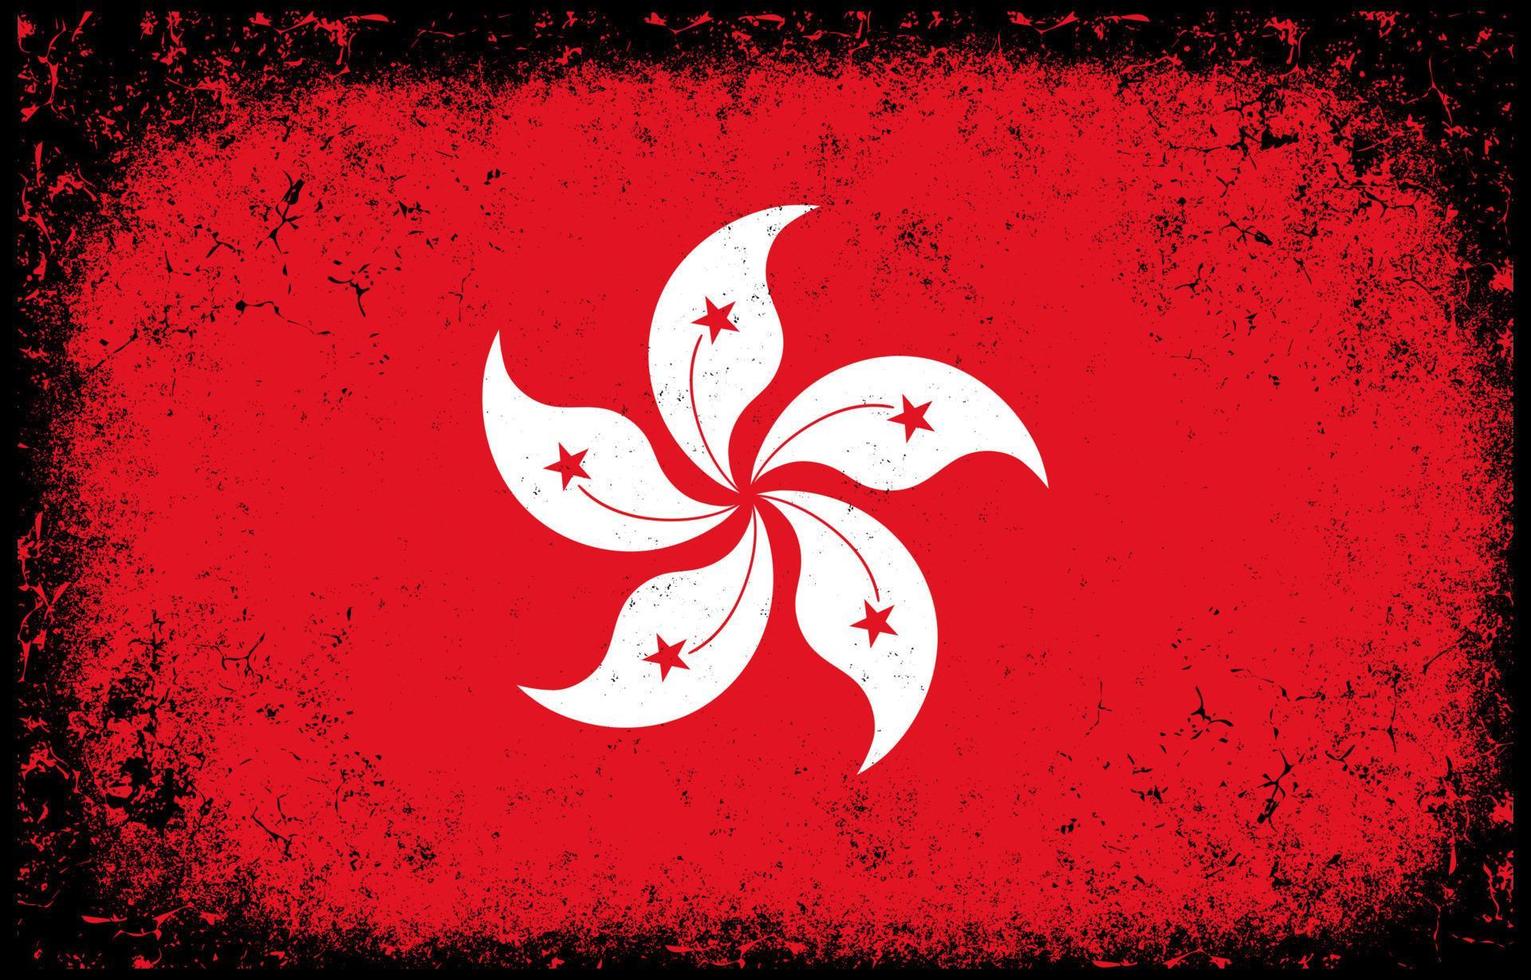 vieux, sale, grunge, vendange, hongkong, drapeau national, illustration vecteur